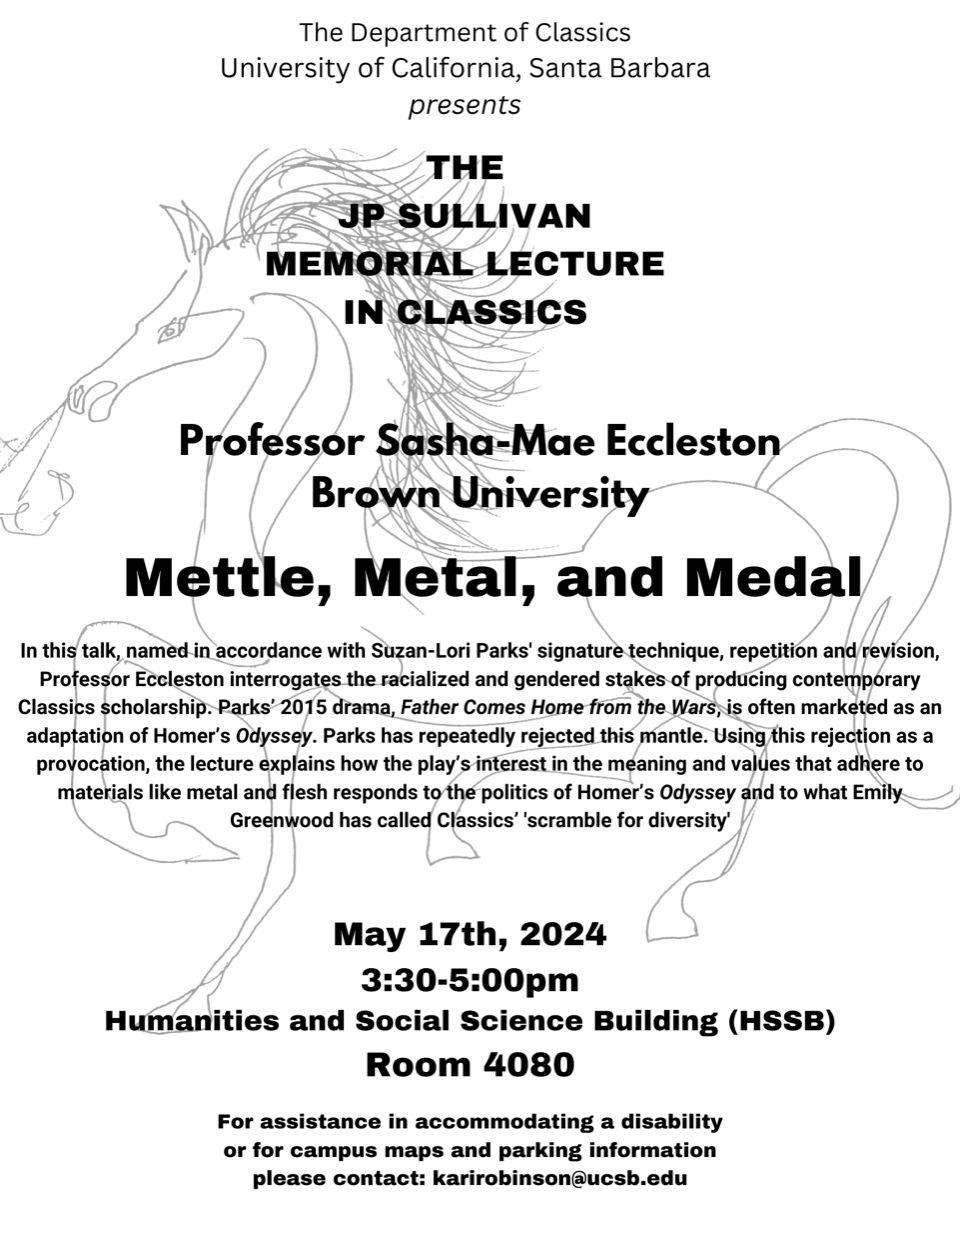 Sasha-Mae Eccleston (Brown), “Mettle, Metal, and Medal” (J.P. Sullivan Memorial Lecture) @ HSSB 4080